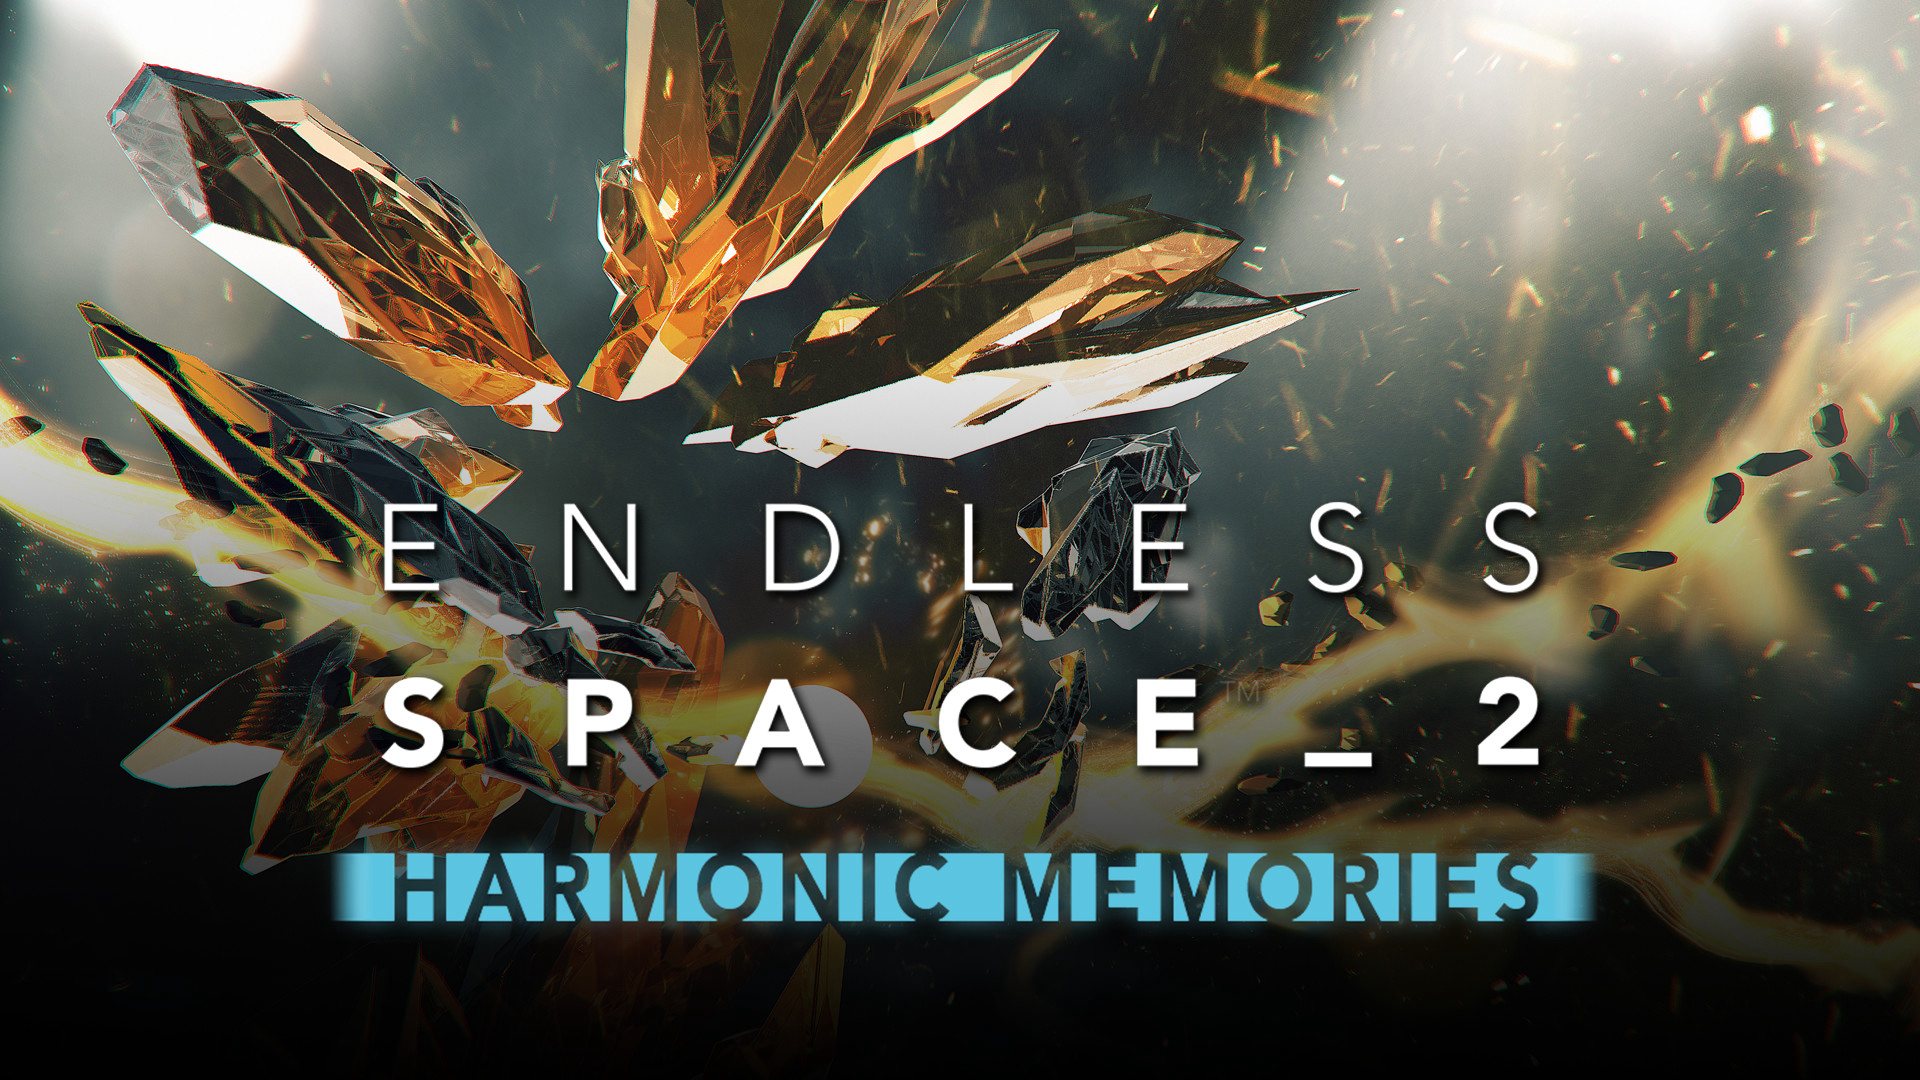 Endless Space 2 - Harmonic Memories DLC Steam CD Key 1.45$